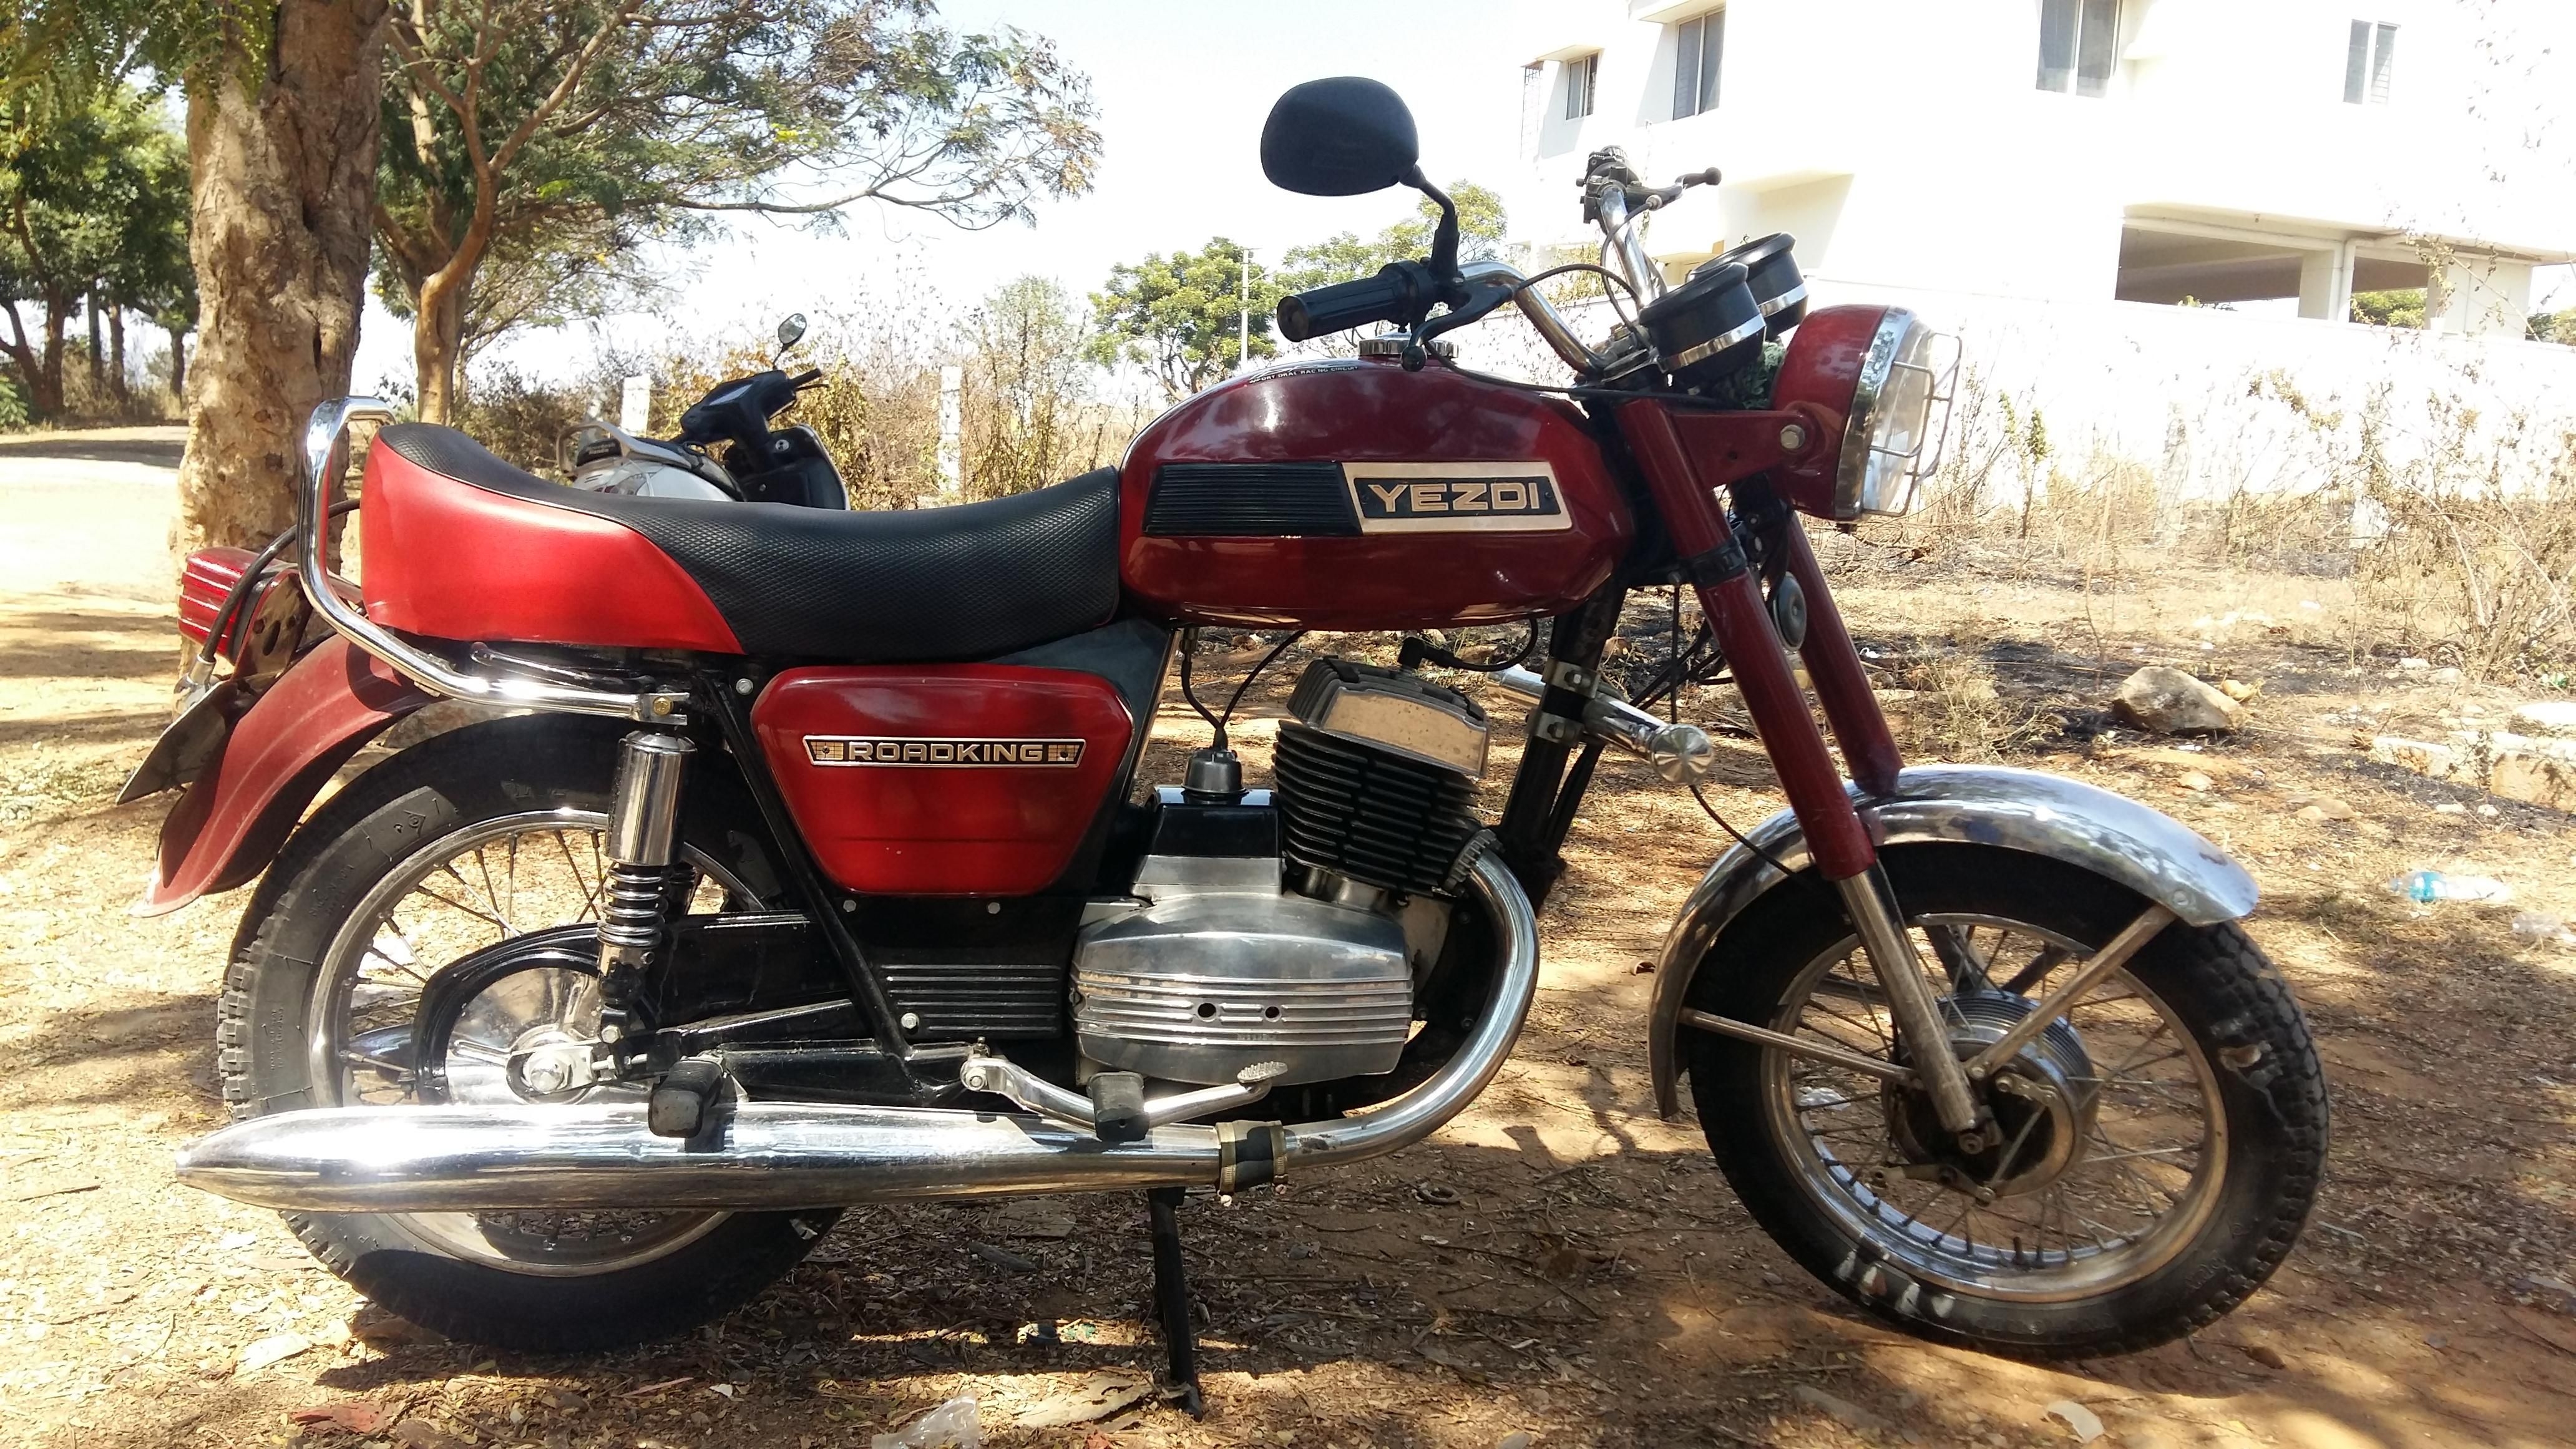 Ideal Jawa Yezdi Roadking Vintage Bike For Sale In Bangalore Id